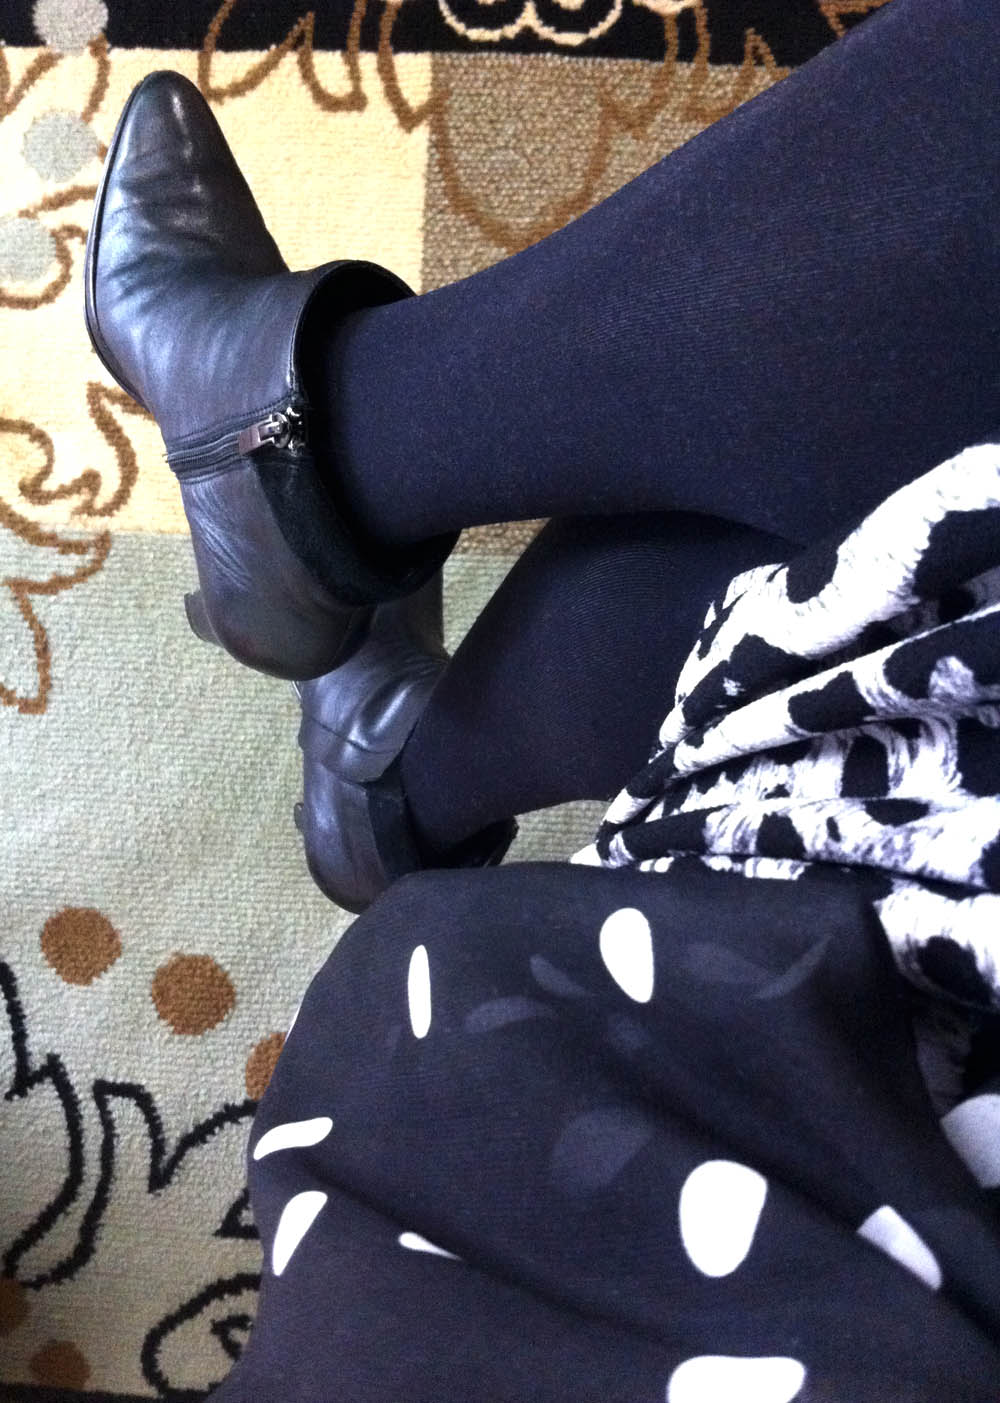 animal print dress black fitted jacket black white polka dot scarf black ankle boots black tights 3